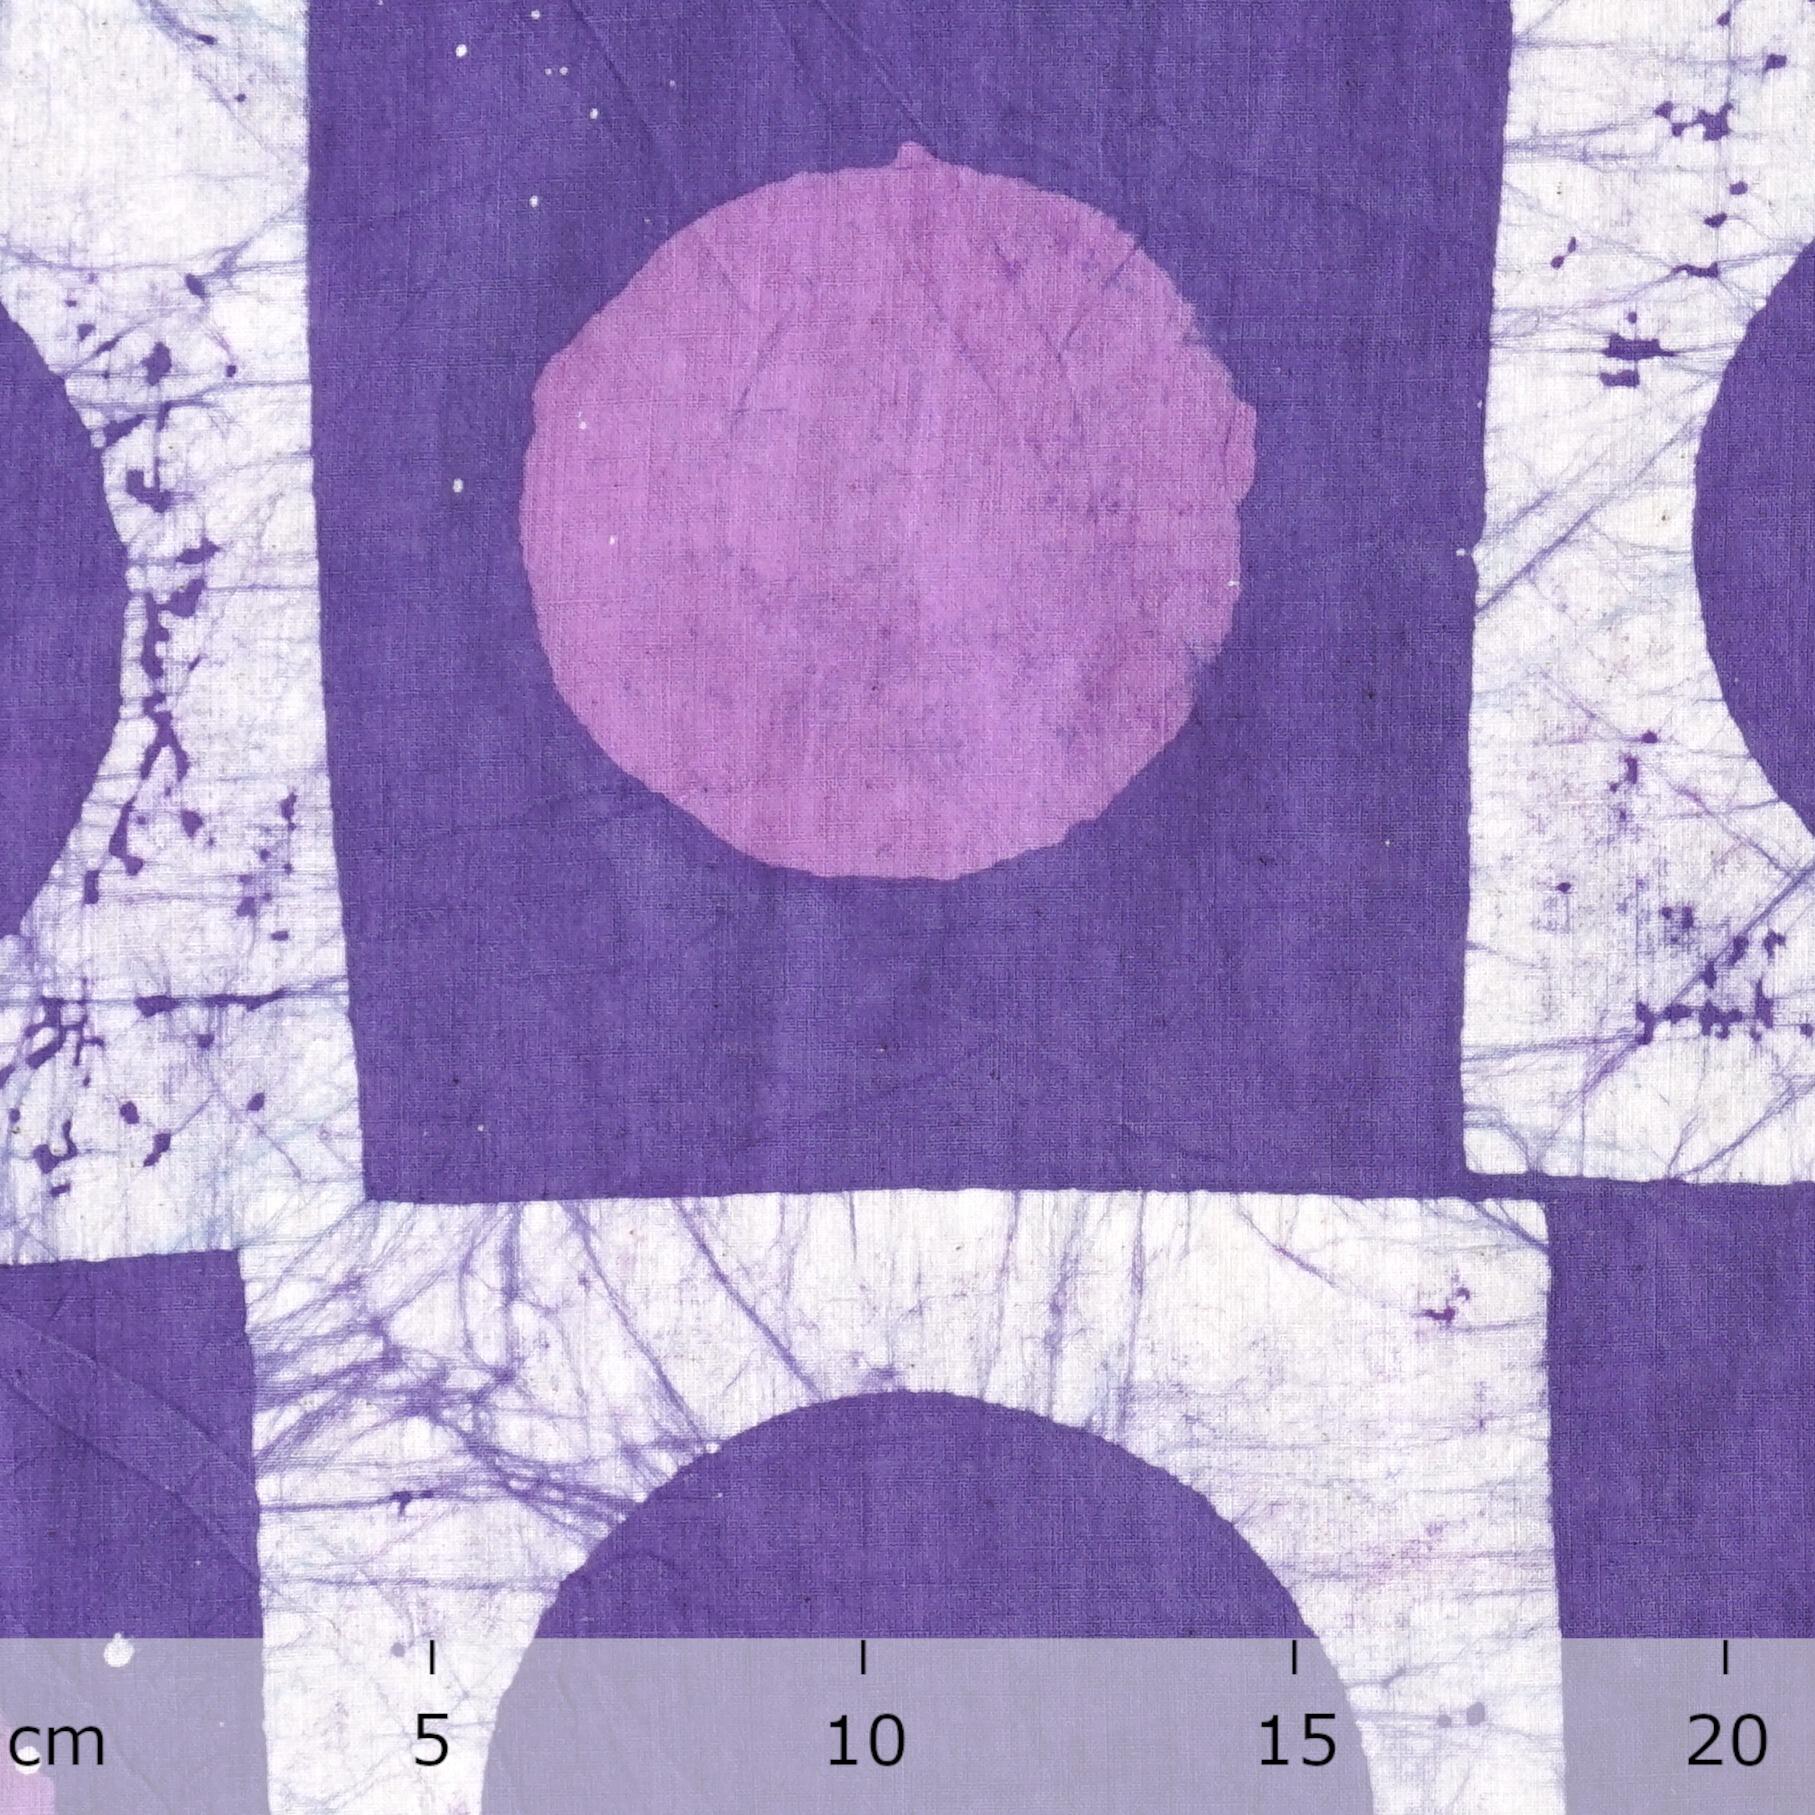 100% Block-Printed Batik Cotton Fabric From India - Soap Bubble Print - Purple Reactive Dye - Ruler